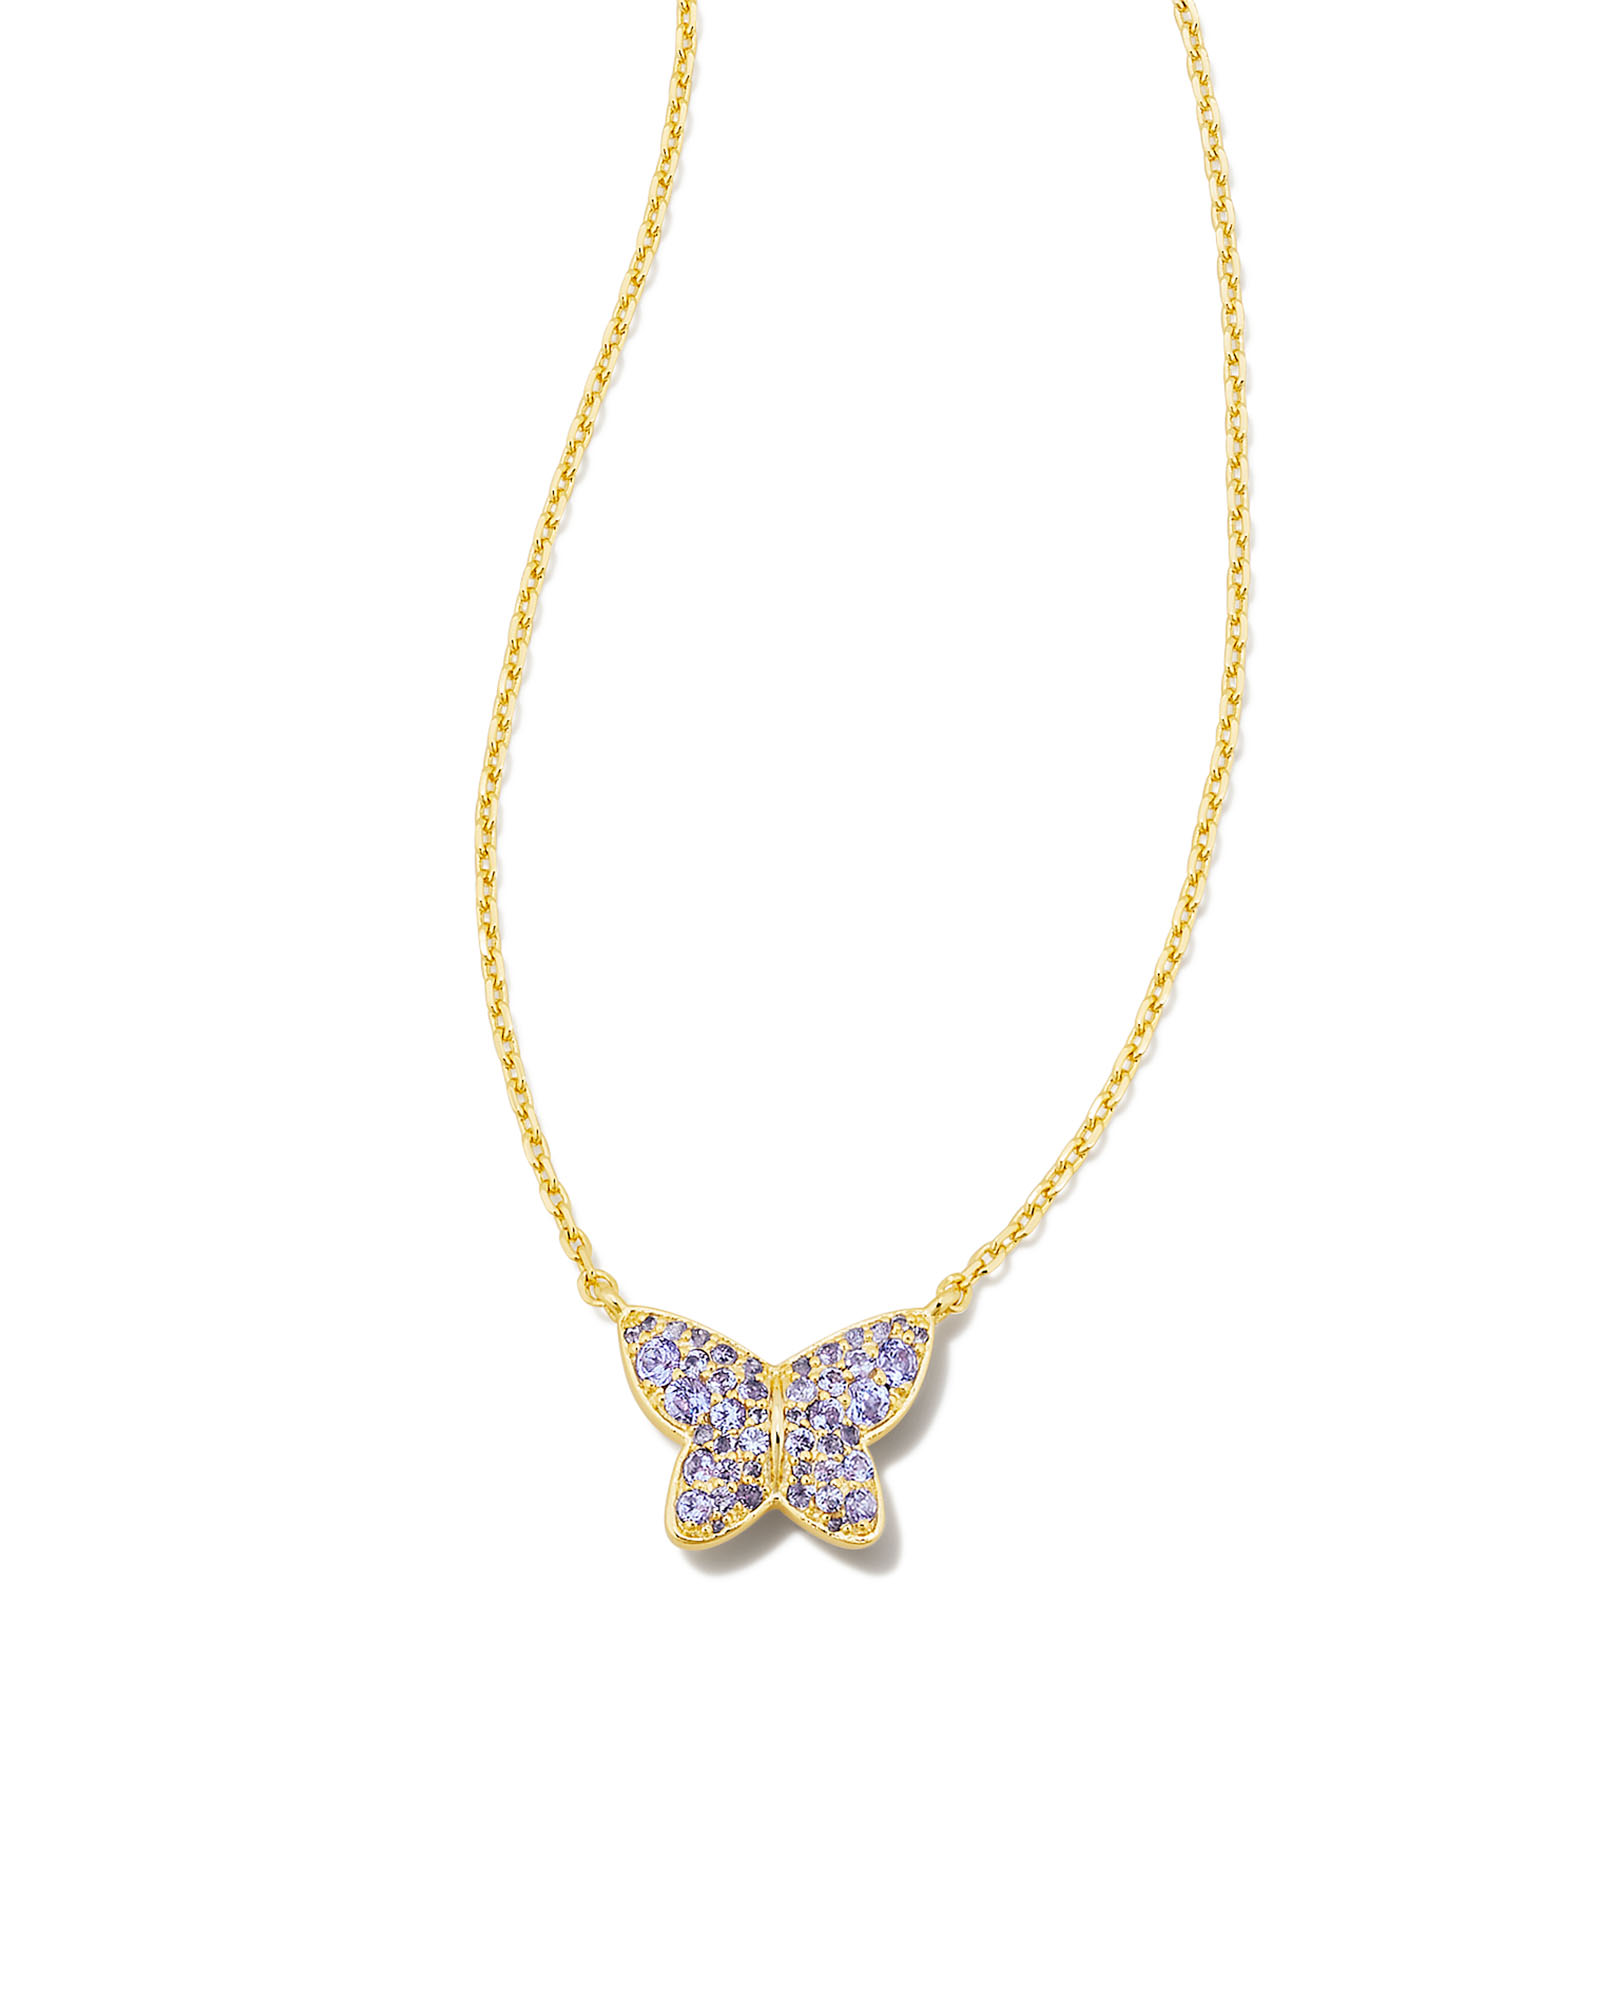 New Arrivals! Kendra Scott Purple Opal Pendant Necklace | Opal pendant  necklace, Rose gold pendant necklace, Opal pendants